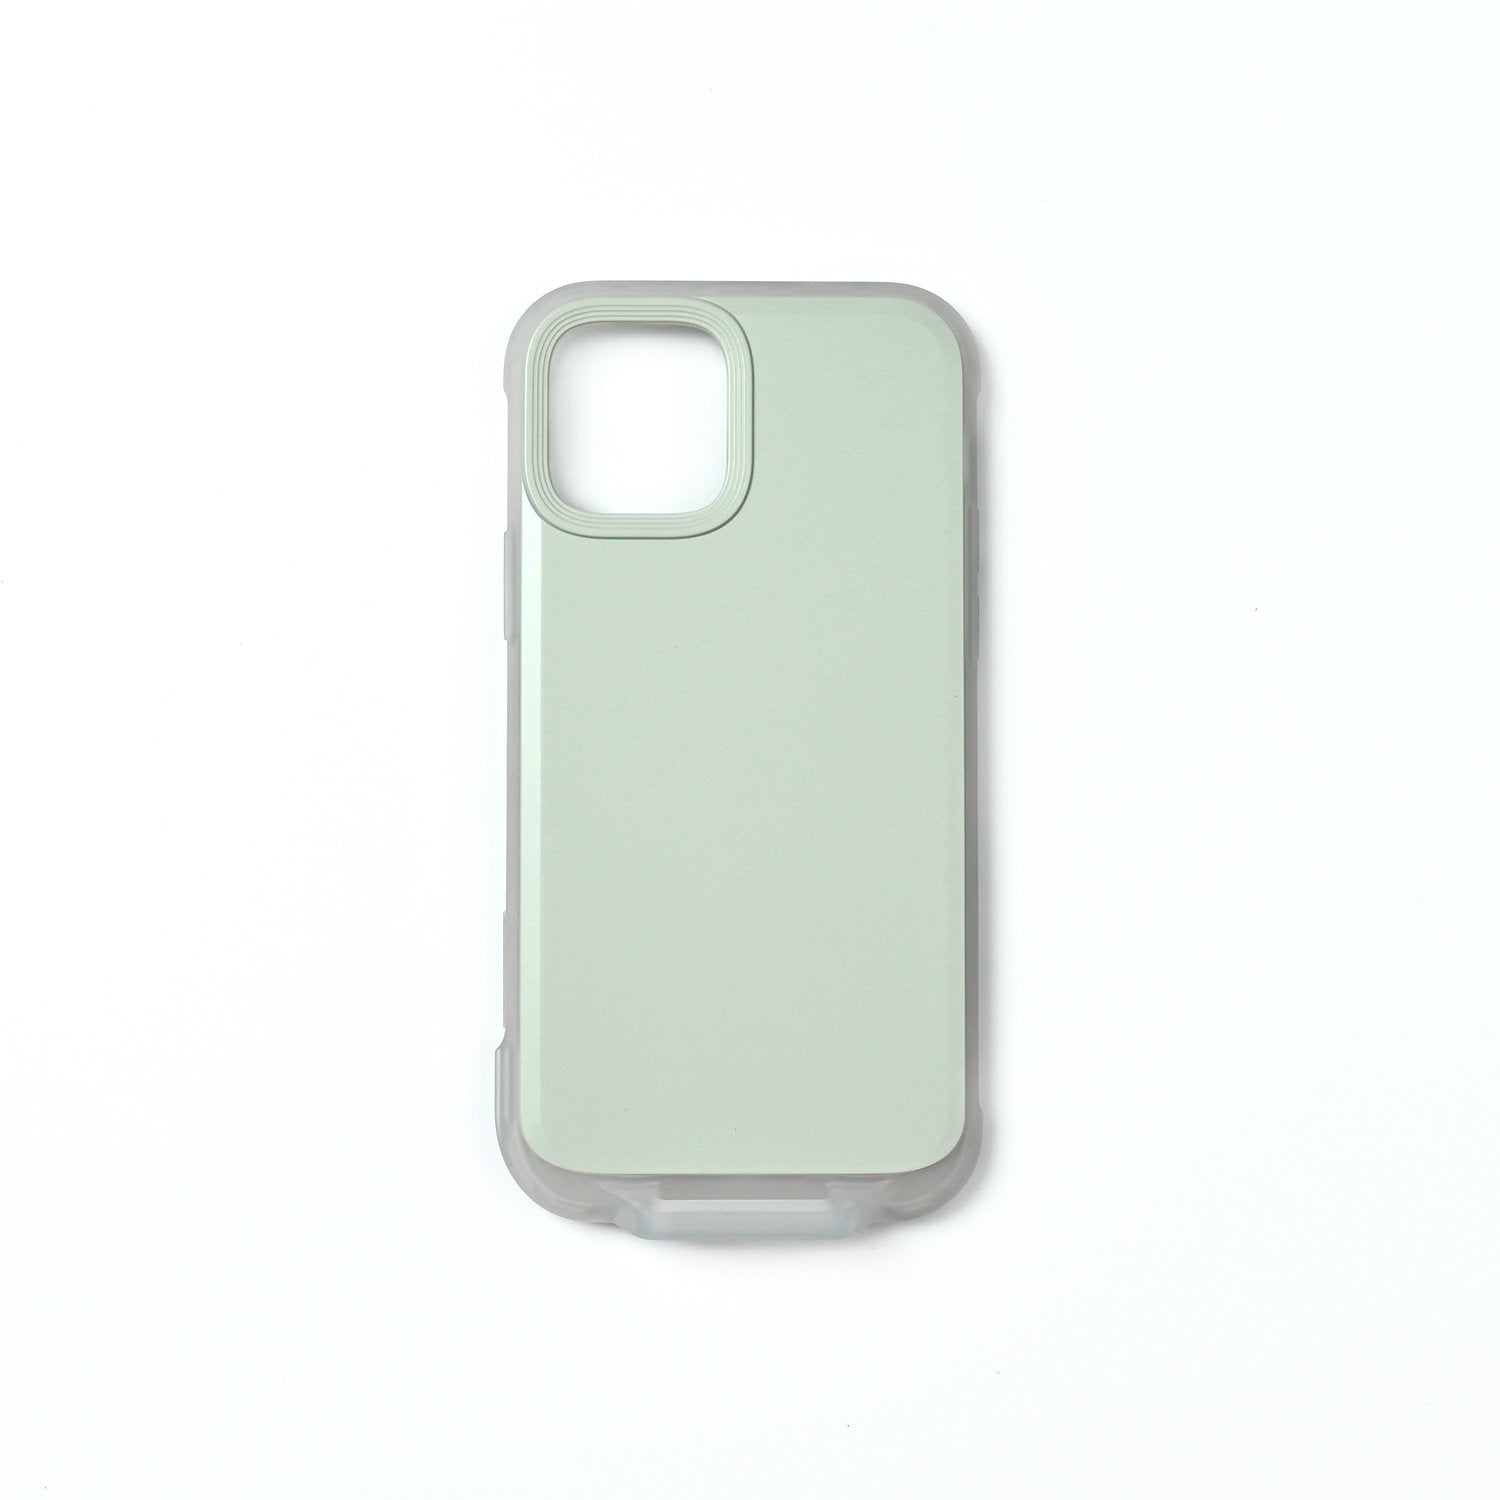 Wander Case 立扣殼 for iPhone 12 系列 淺綠色